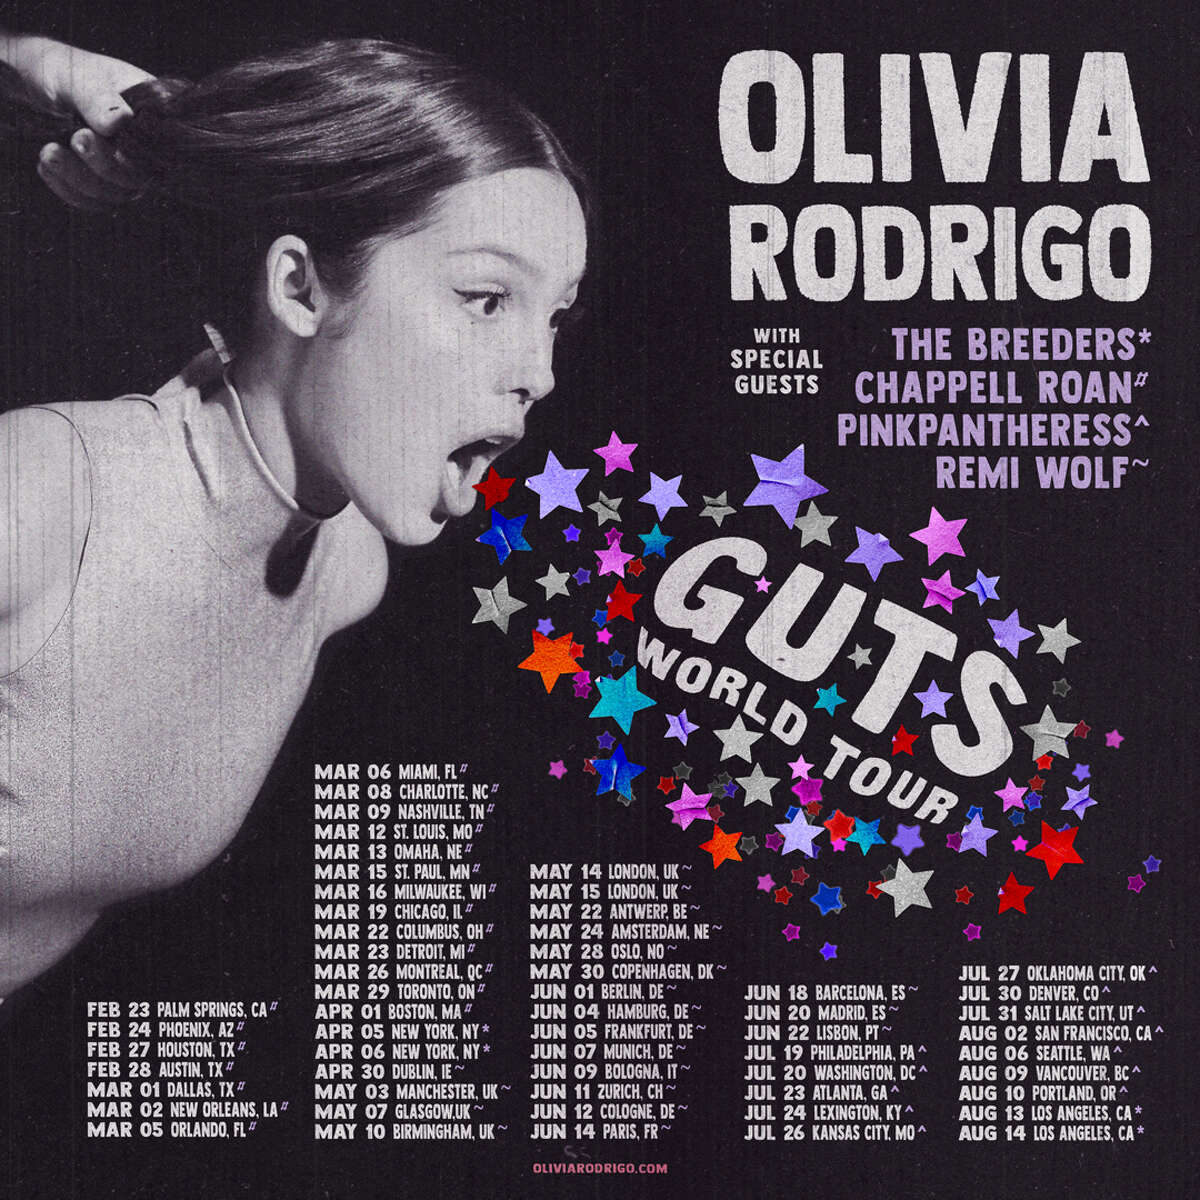 Olivia Rodrigo is bringing her Guts World Tour to Houston for a show